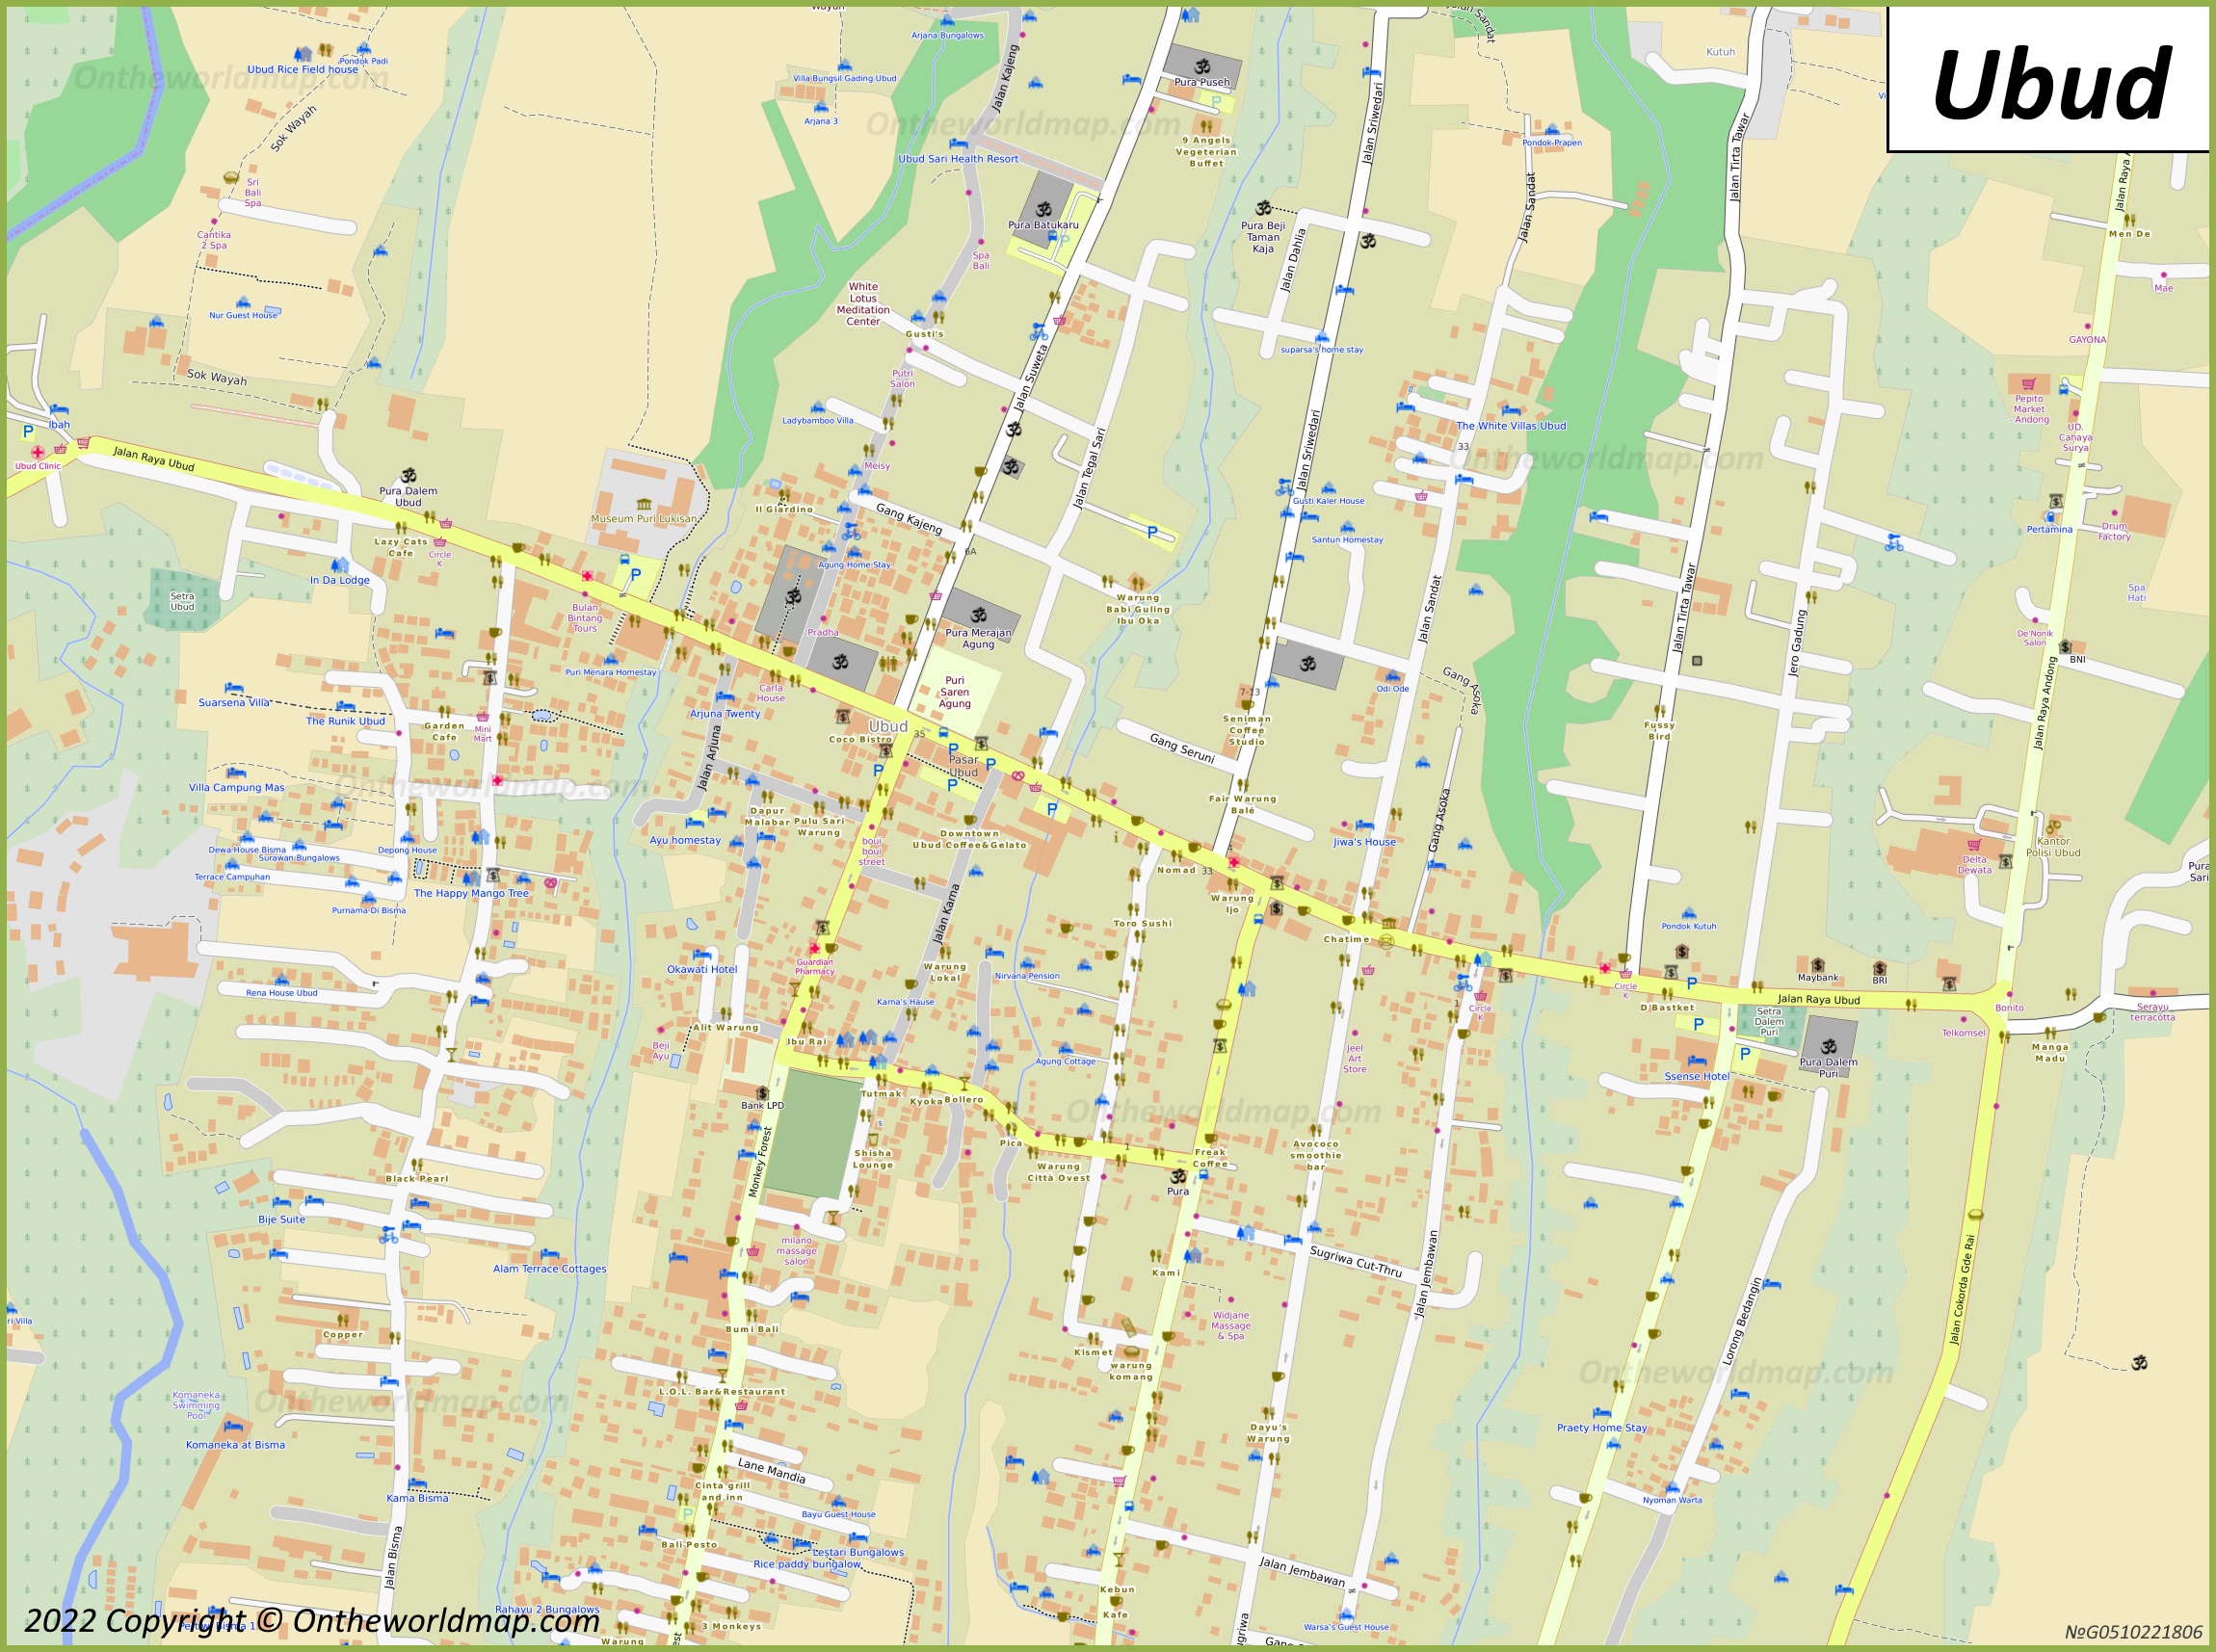 Ubud Town Centre Map